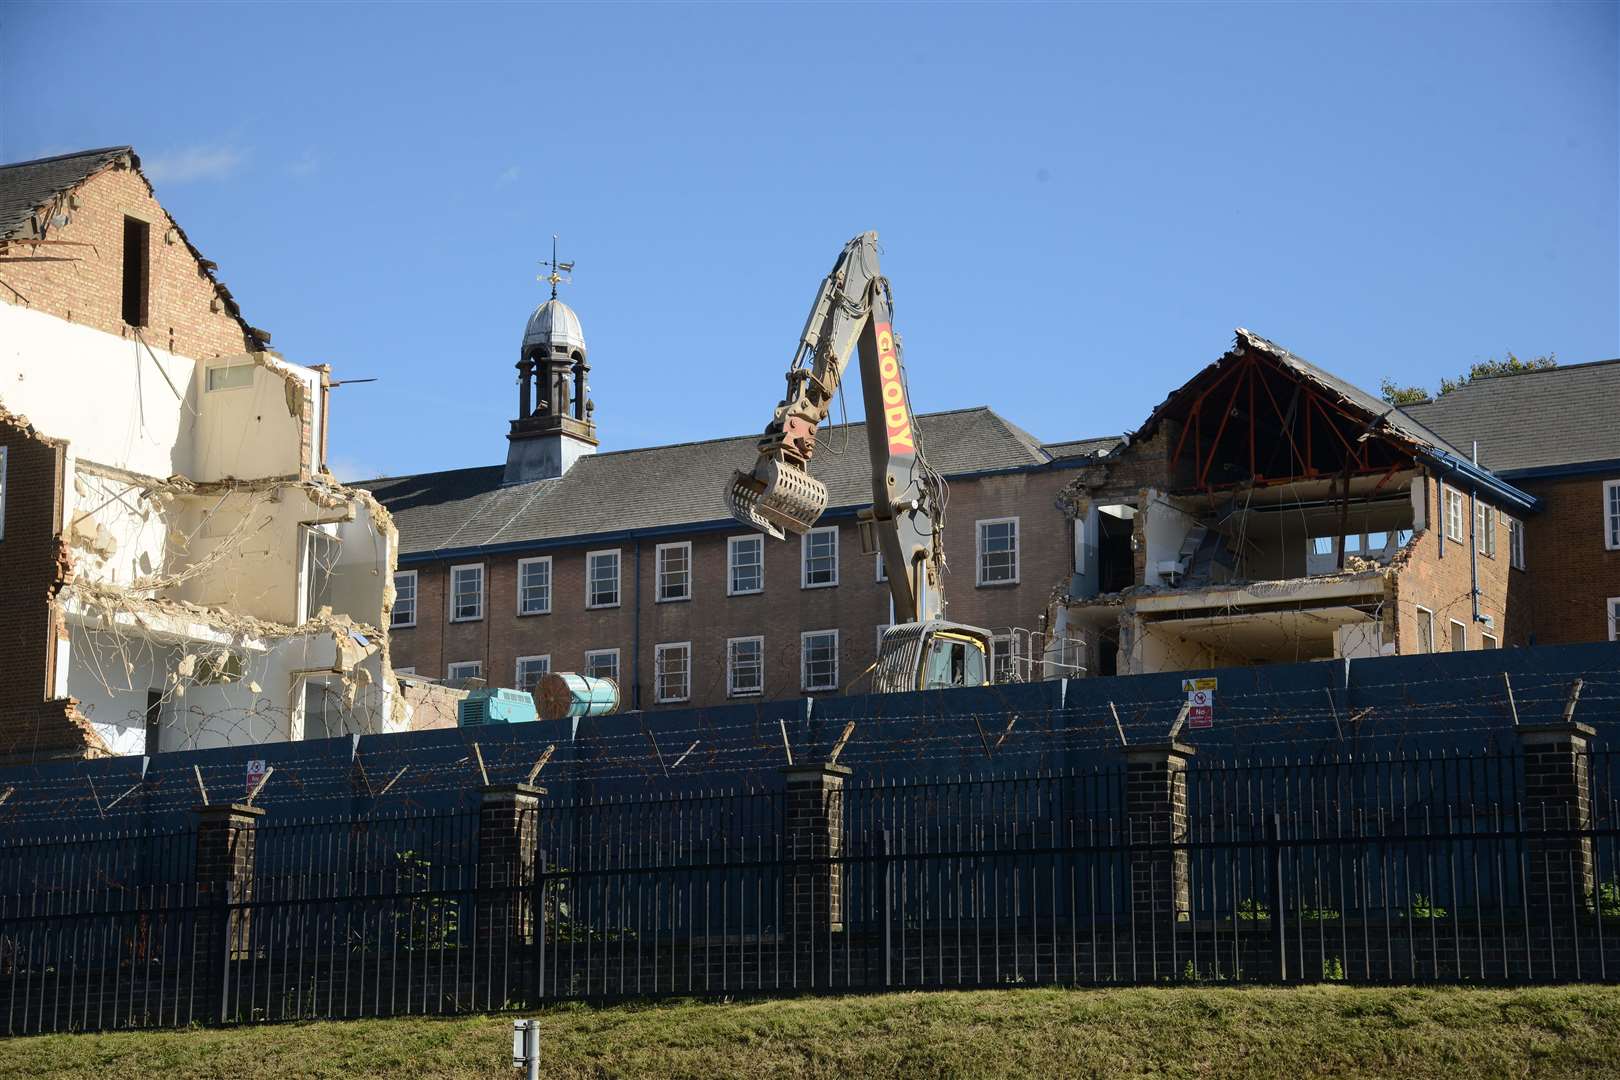 Kitchener Barracks being demolished